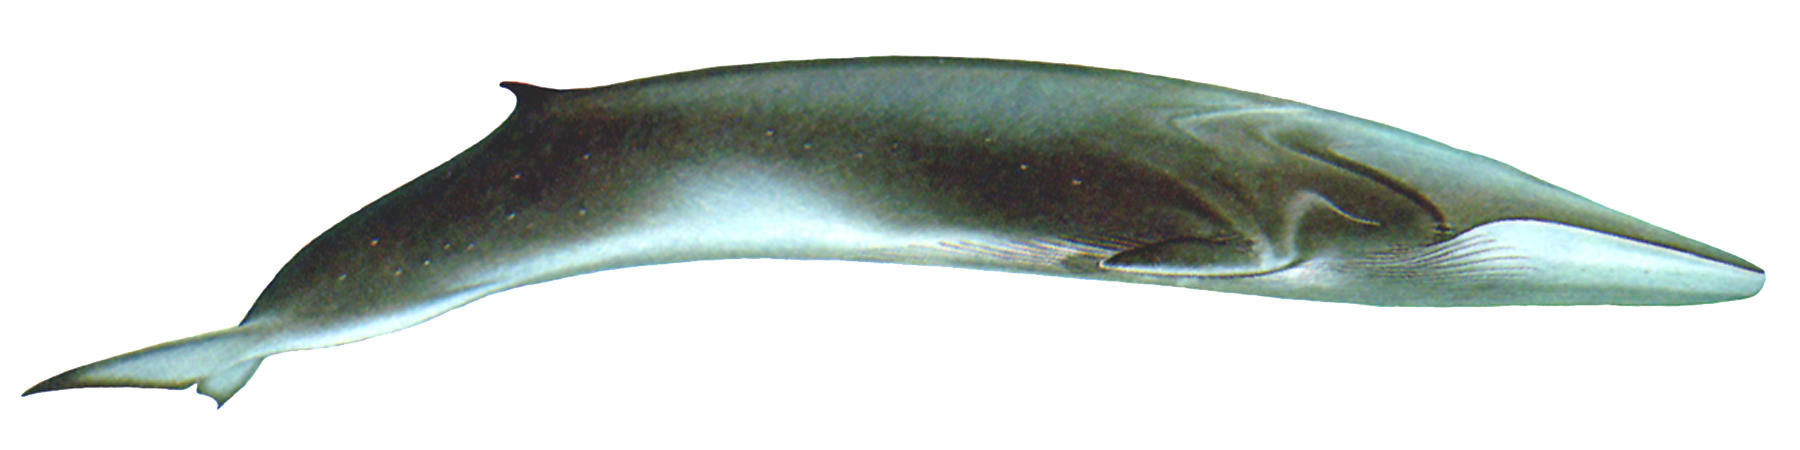 Cetacea PNG Image Background